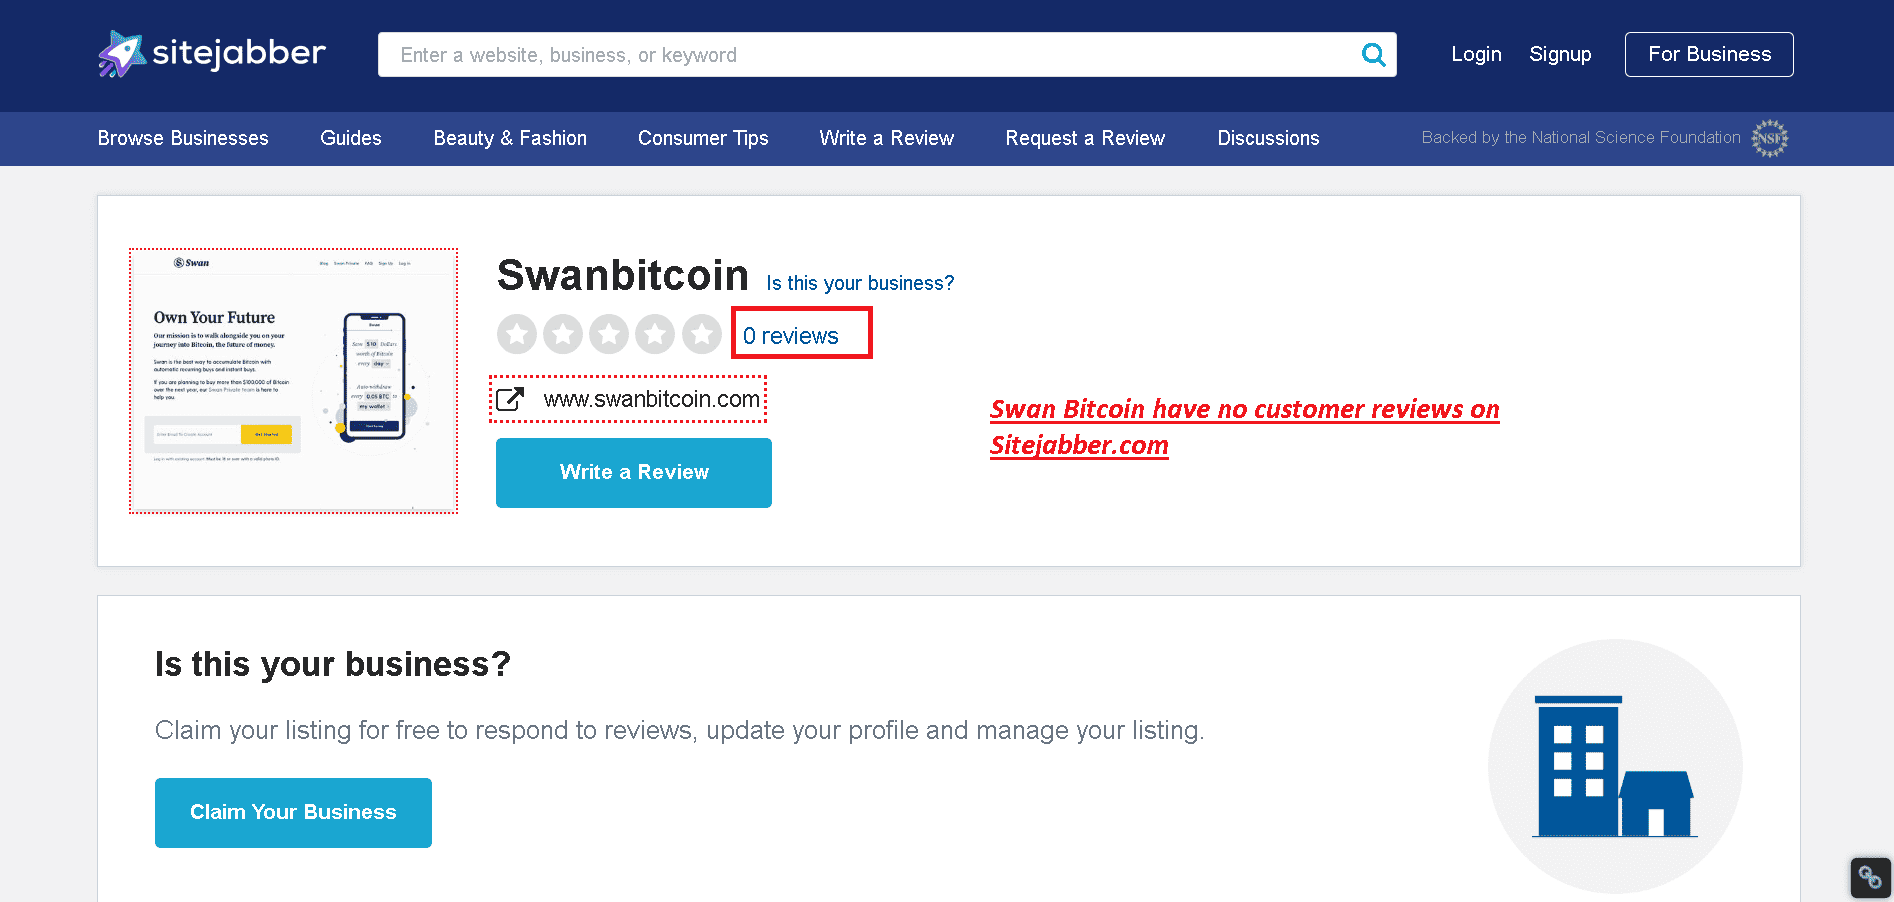 Swan Bitcoin has no customer reviews on Sitejabber